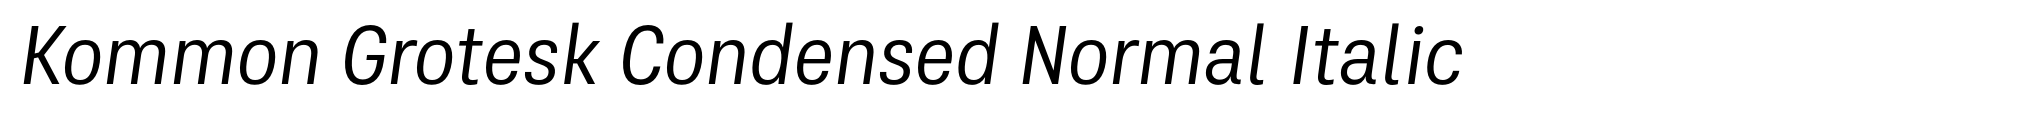 Kommon Grotesk Condensed Normal Italic image